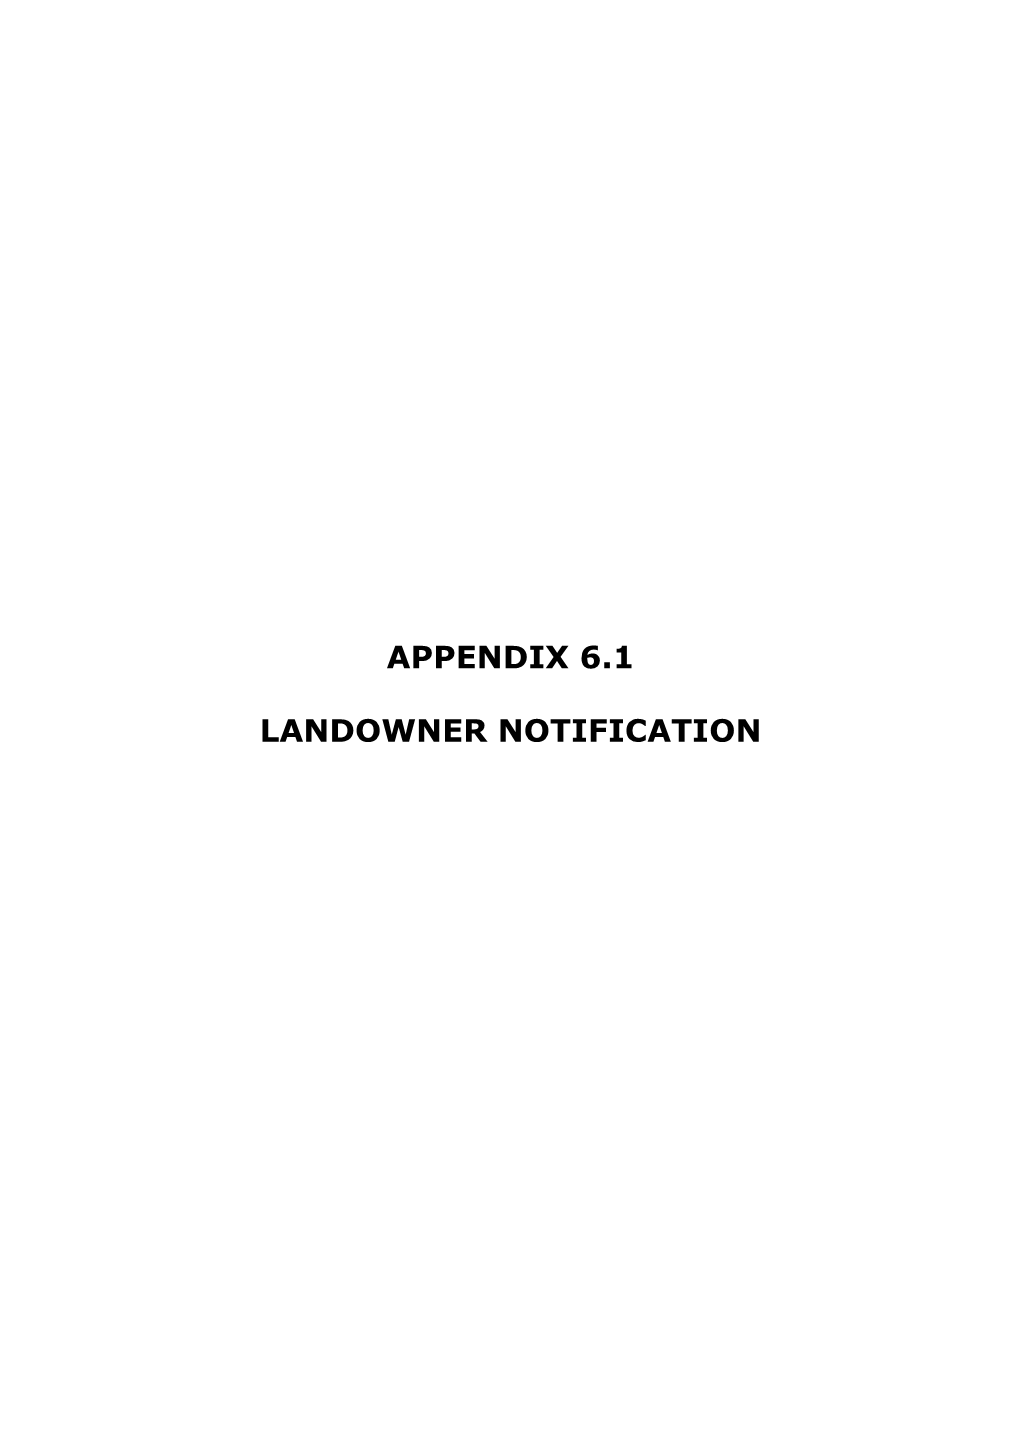 Appendix 6.1 Landowner Notification